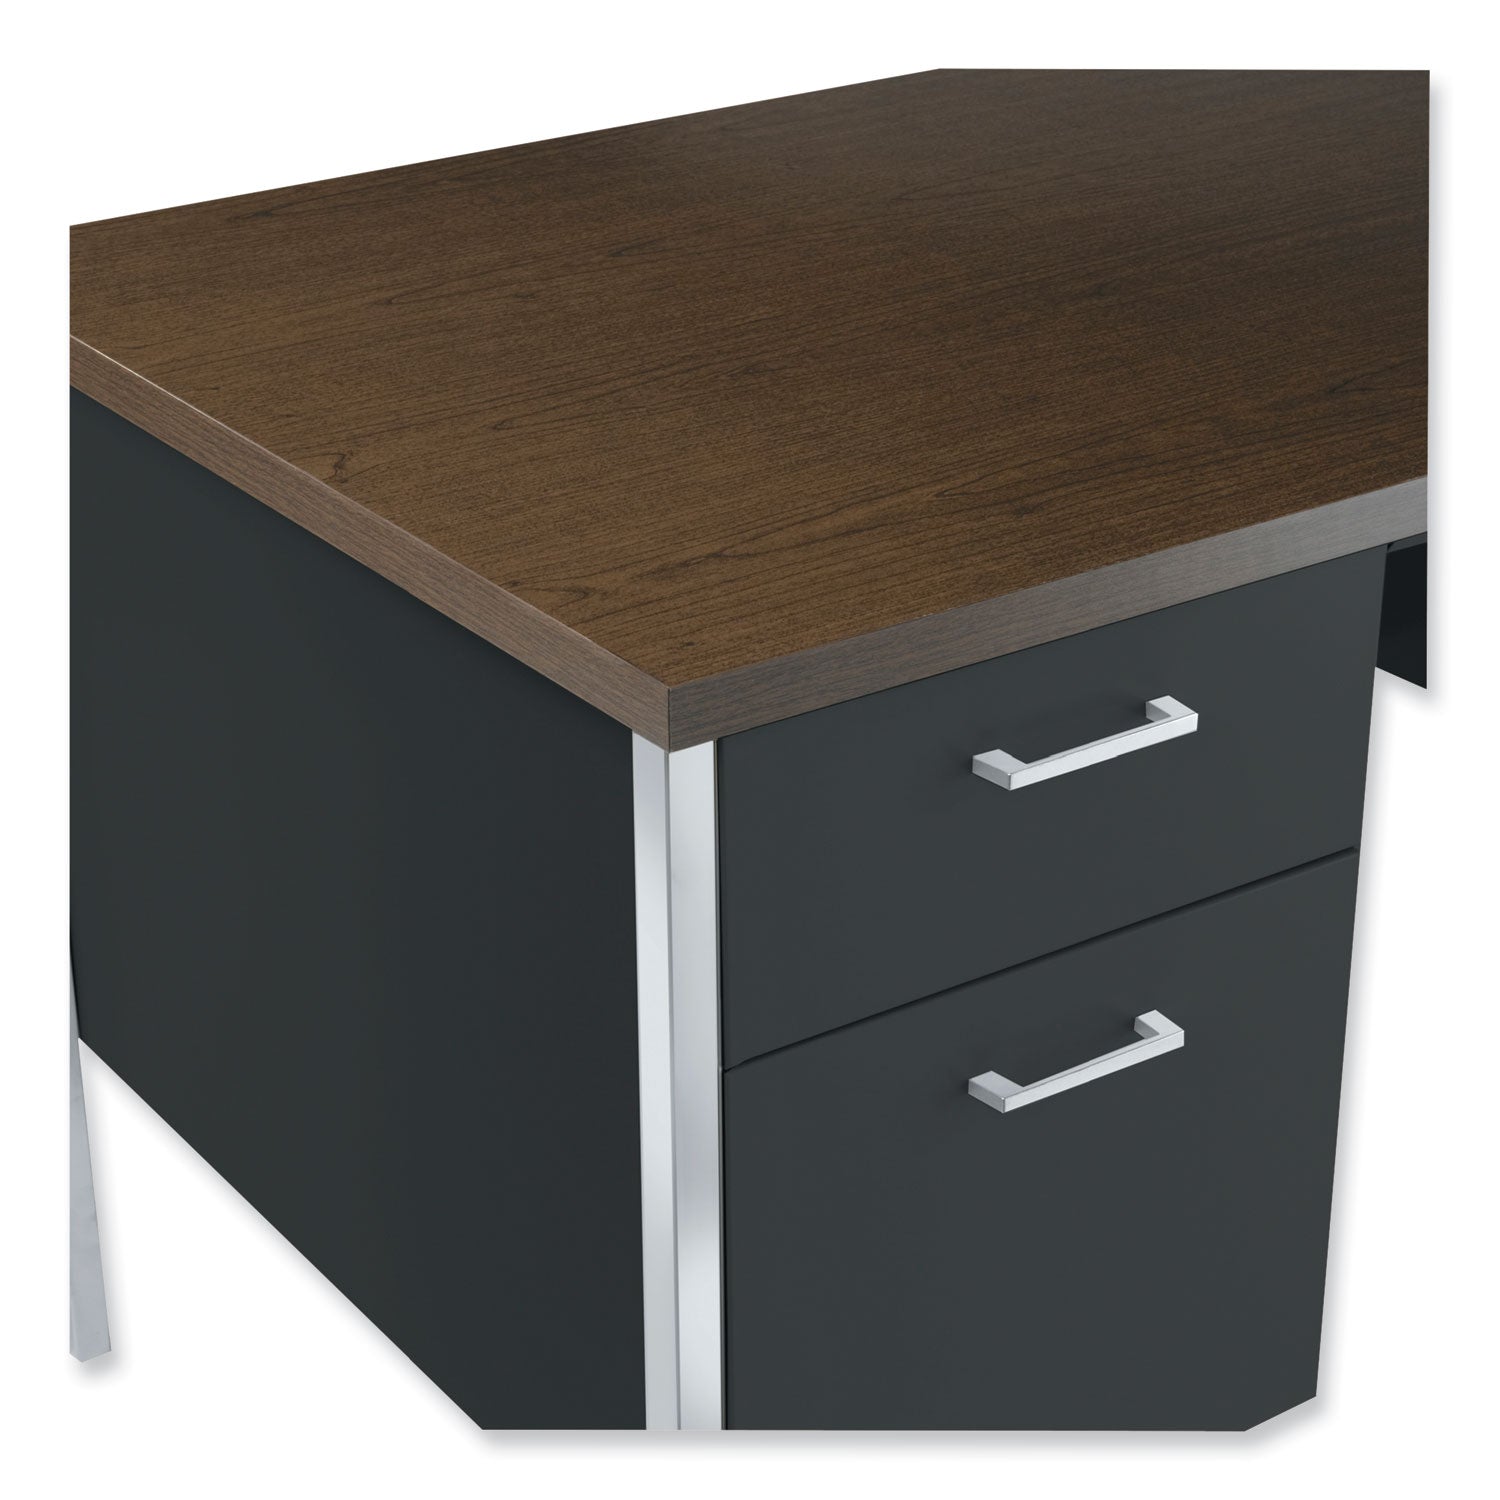 single-pedestal-steel-desk-4525-x-24-x-295-mocha-black-chrome-legs_alesd4524bm - 4